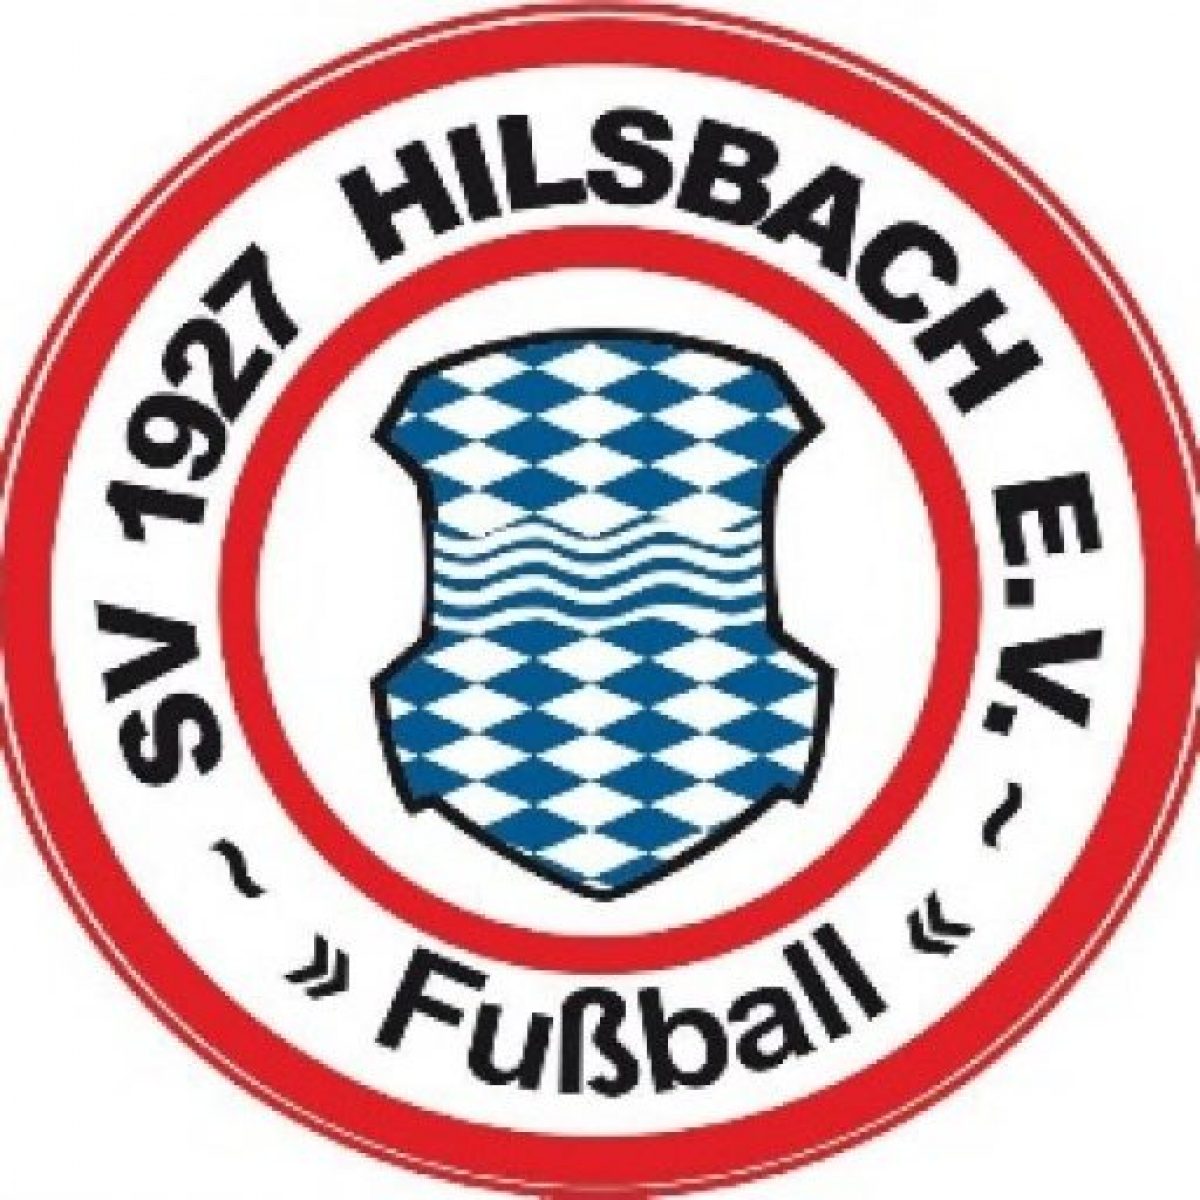 (c) Sv-hilsbach.org